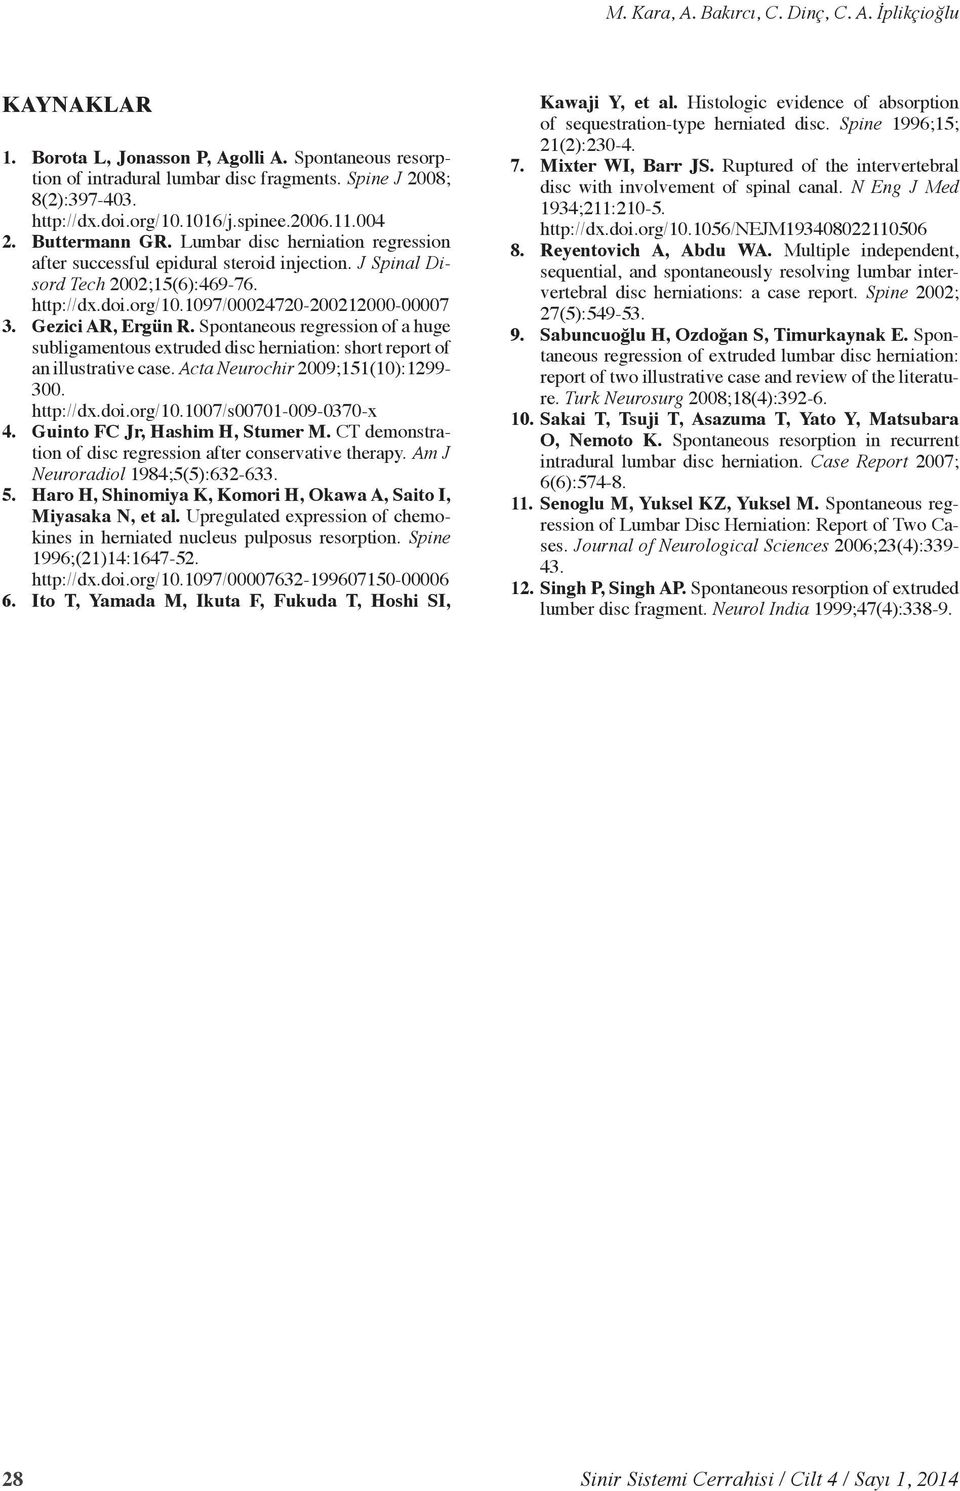 Gezici AR, Ergün R. Spontaneous regression of a huge subligamentous extruded disc herniation: short report of an illustrative case. Acta Neurochir 2009;151(10):1299-300. http://dx.doi.org/10.